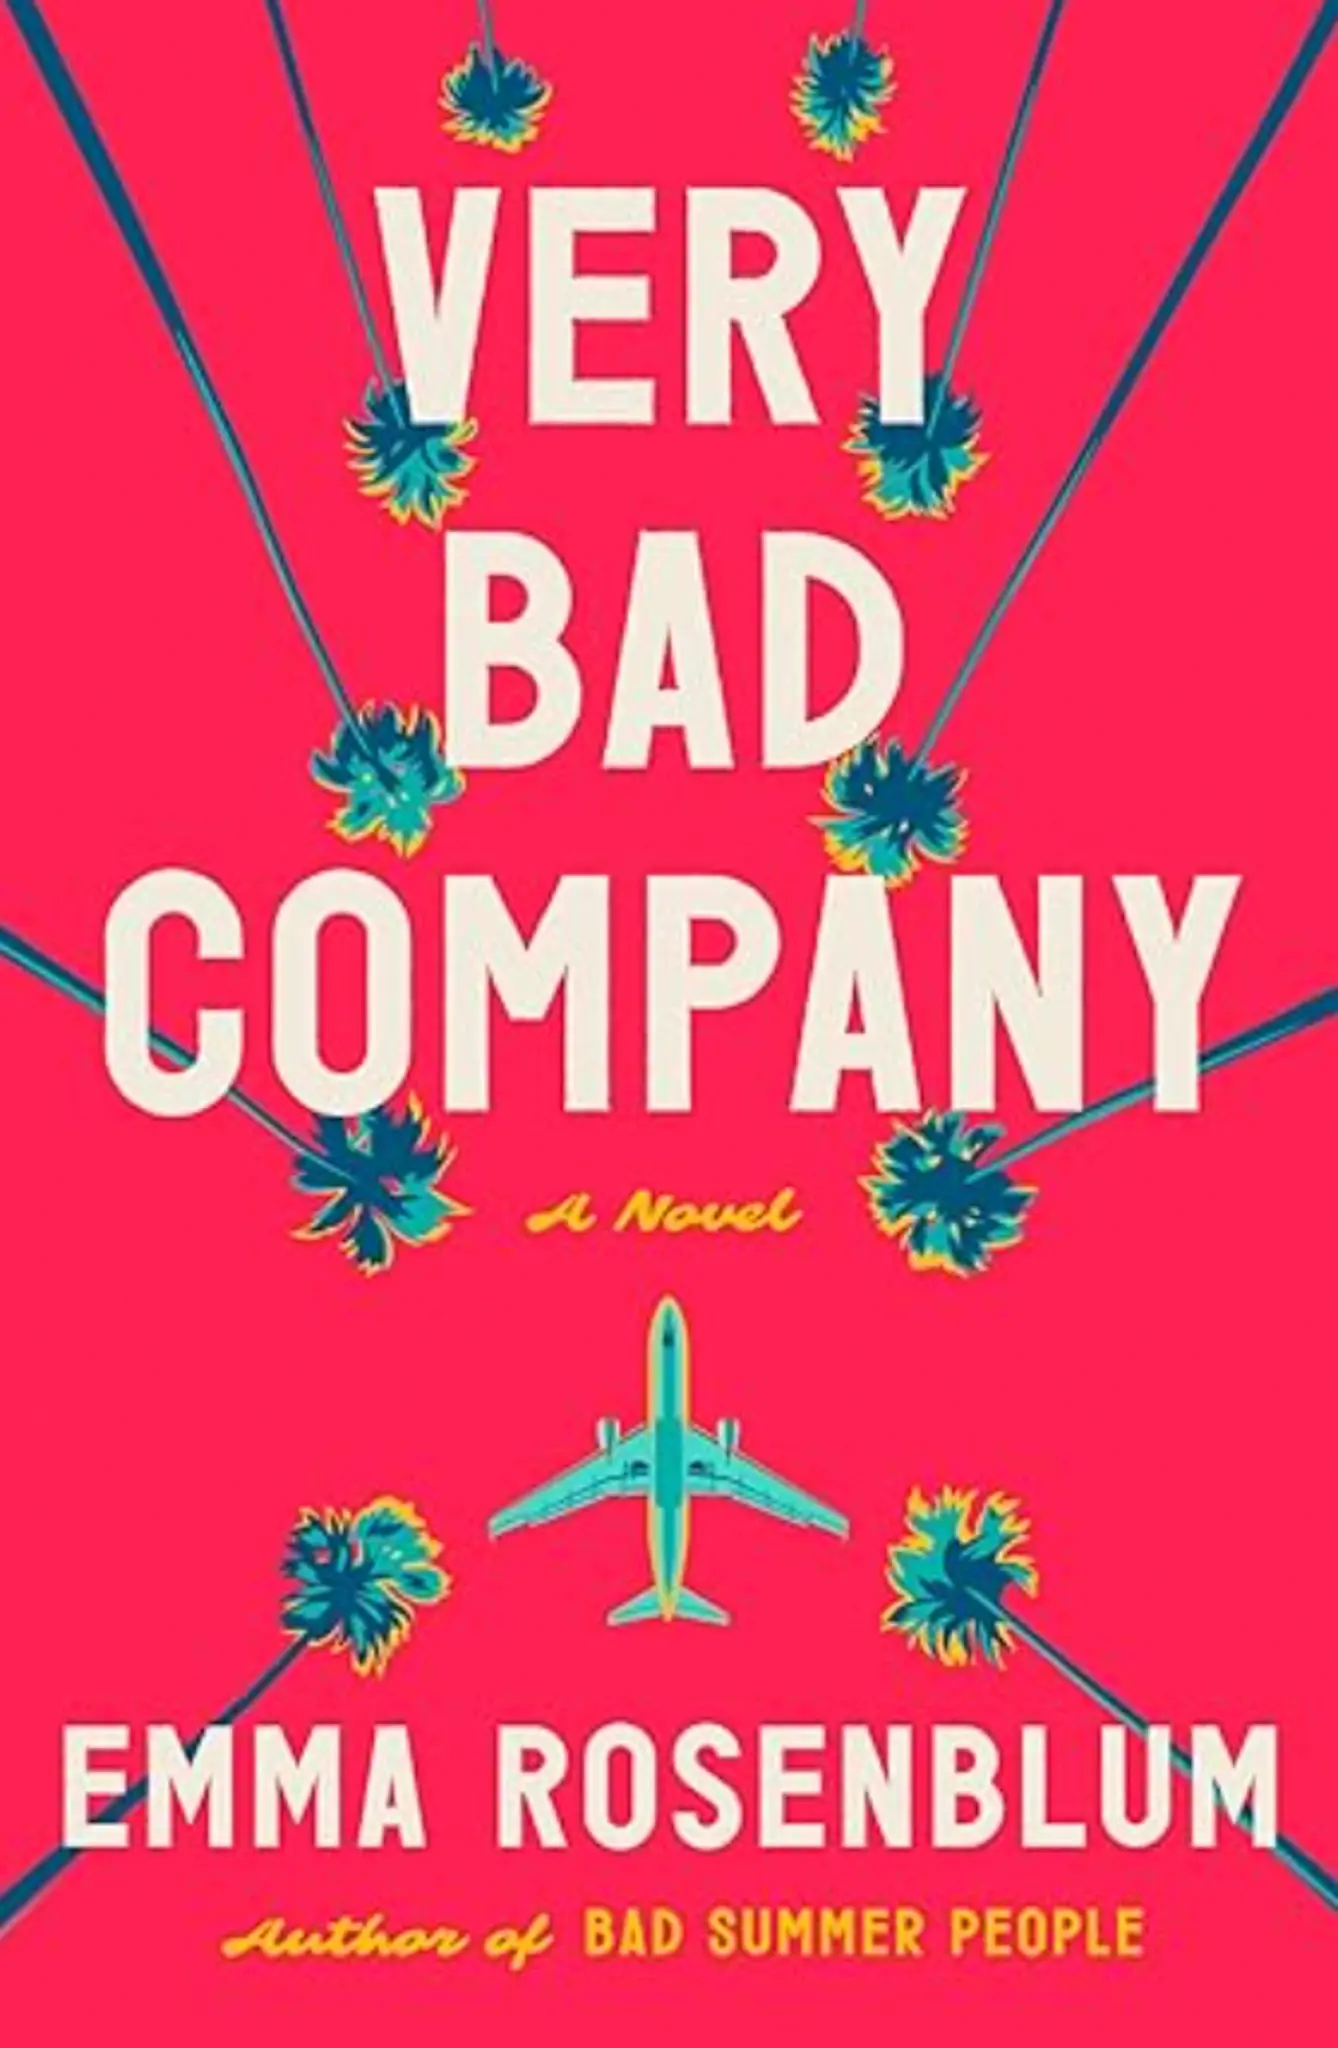 Discover the Dark Secrets of Tech Elites in "Very Bad Company" – Emma Rosenblum's Latest Thriller Reveals All!